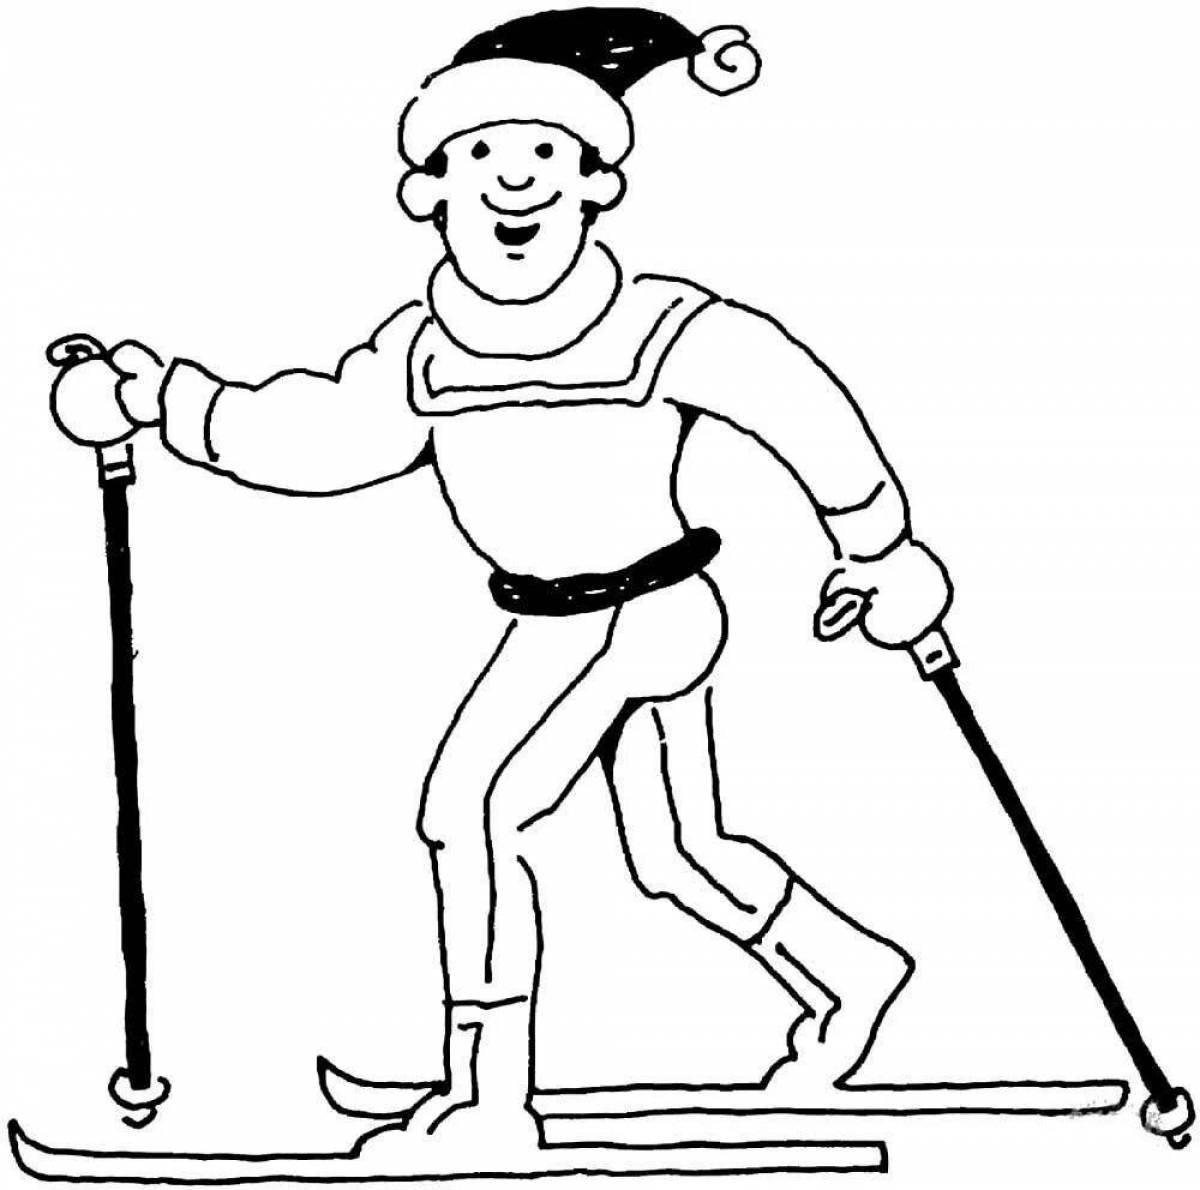 Joyful man skiing